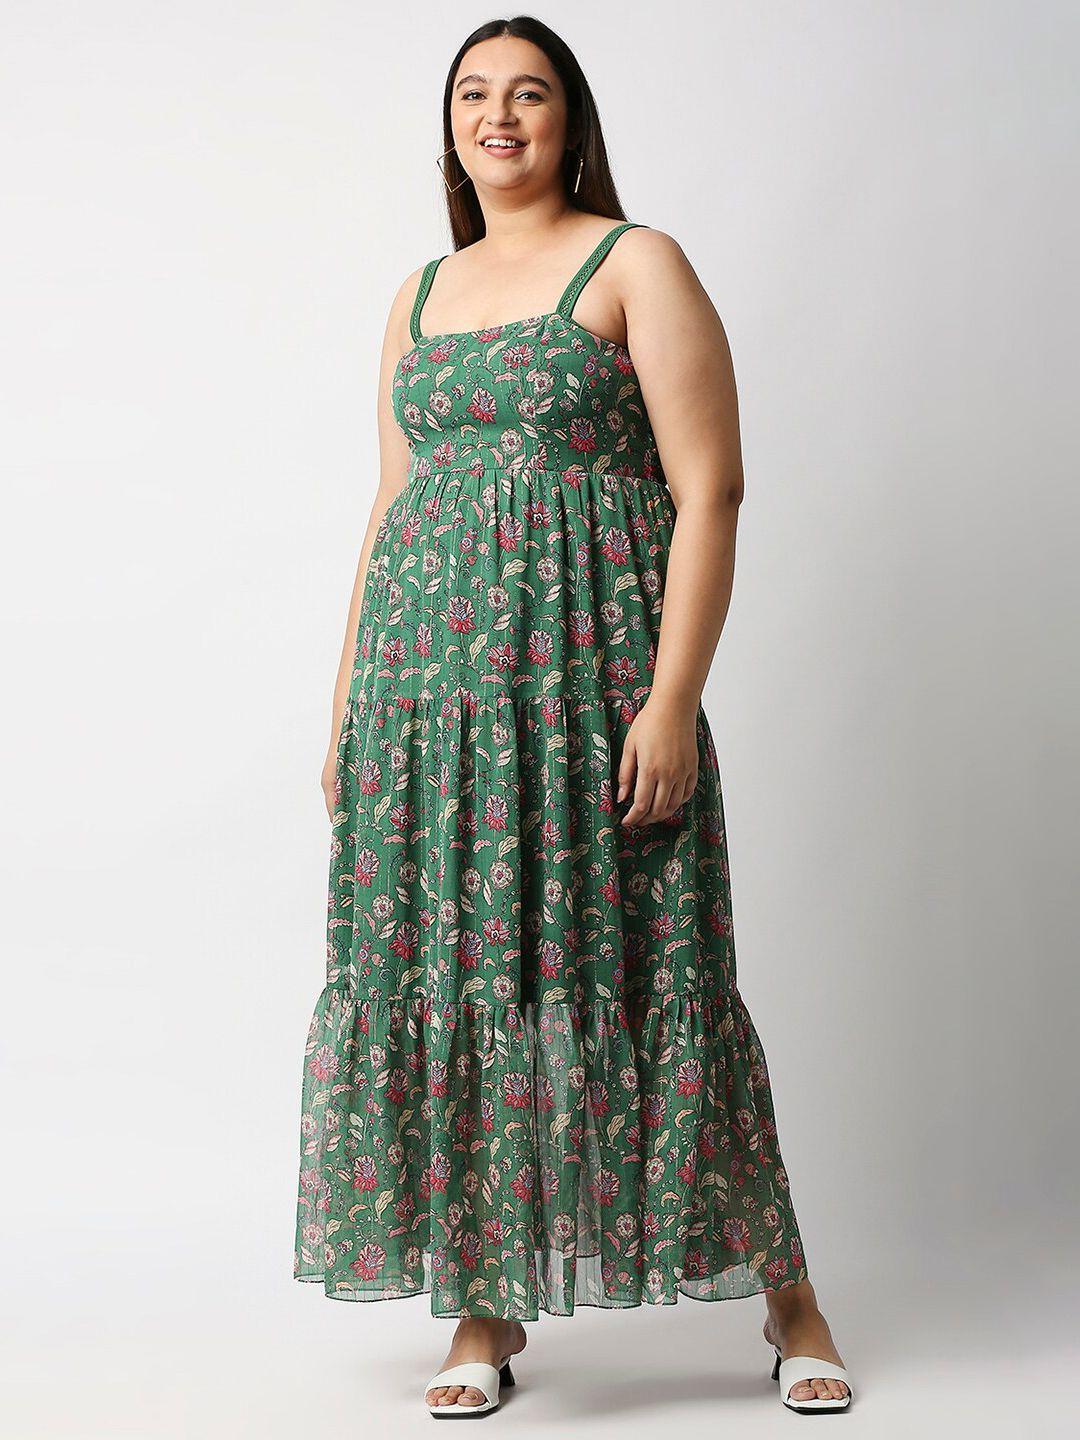 20dresses women green & red floral printed chiffon maxi dress